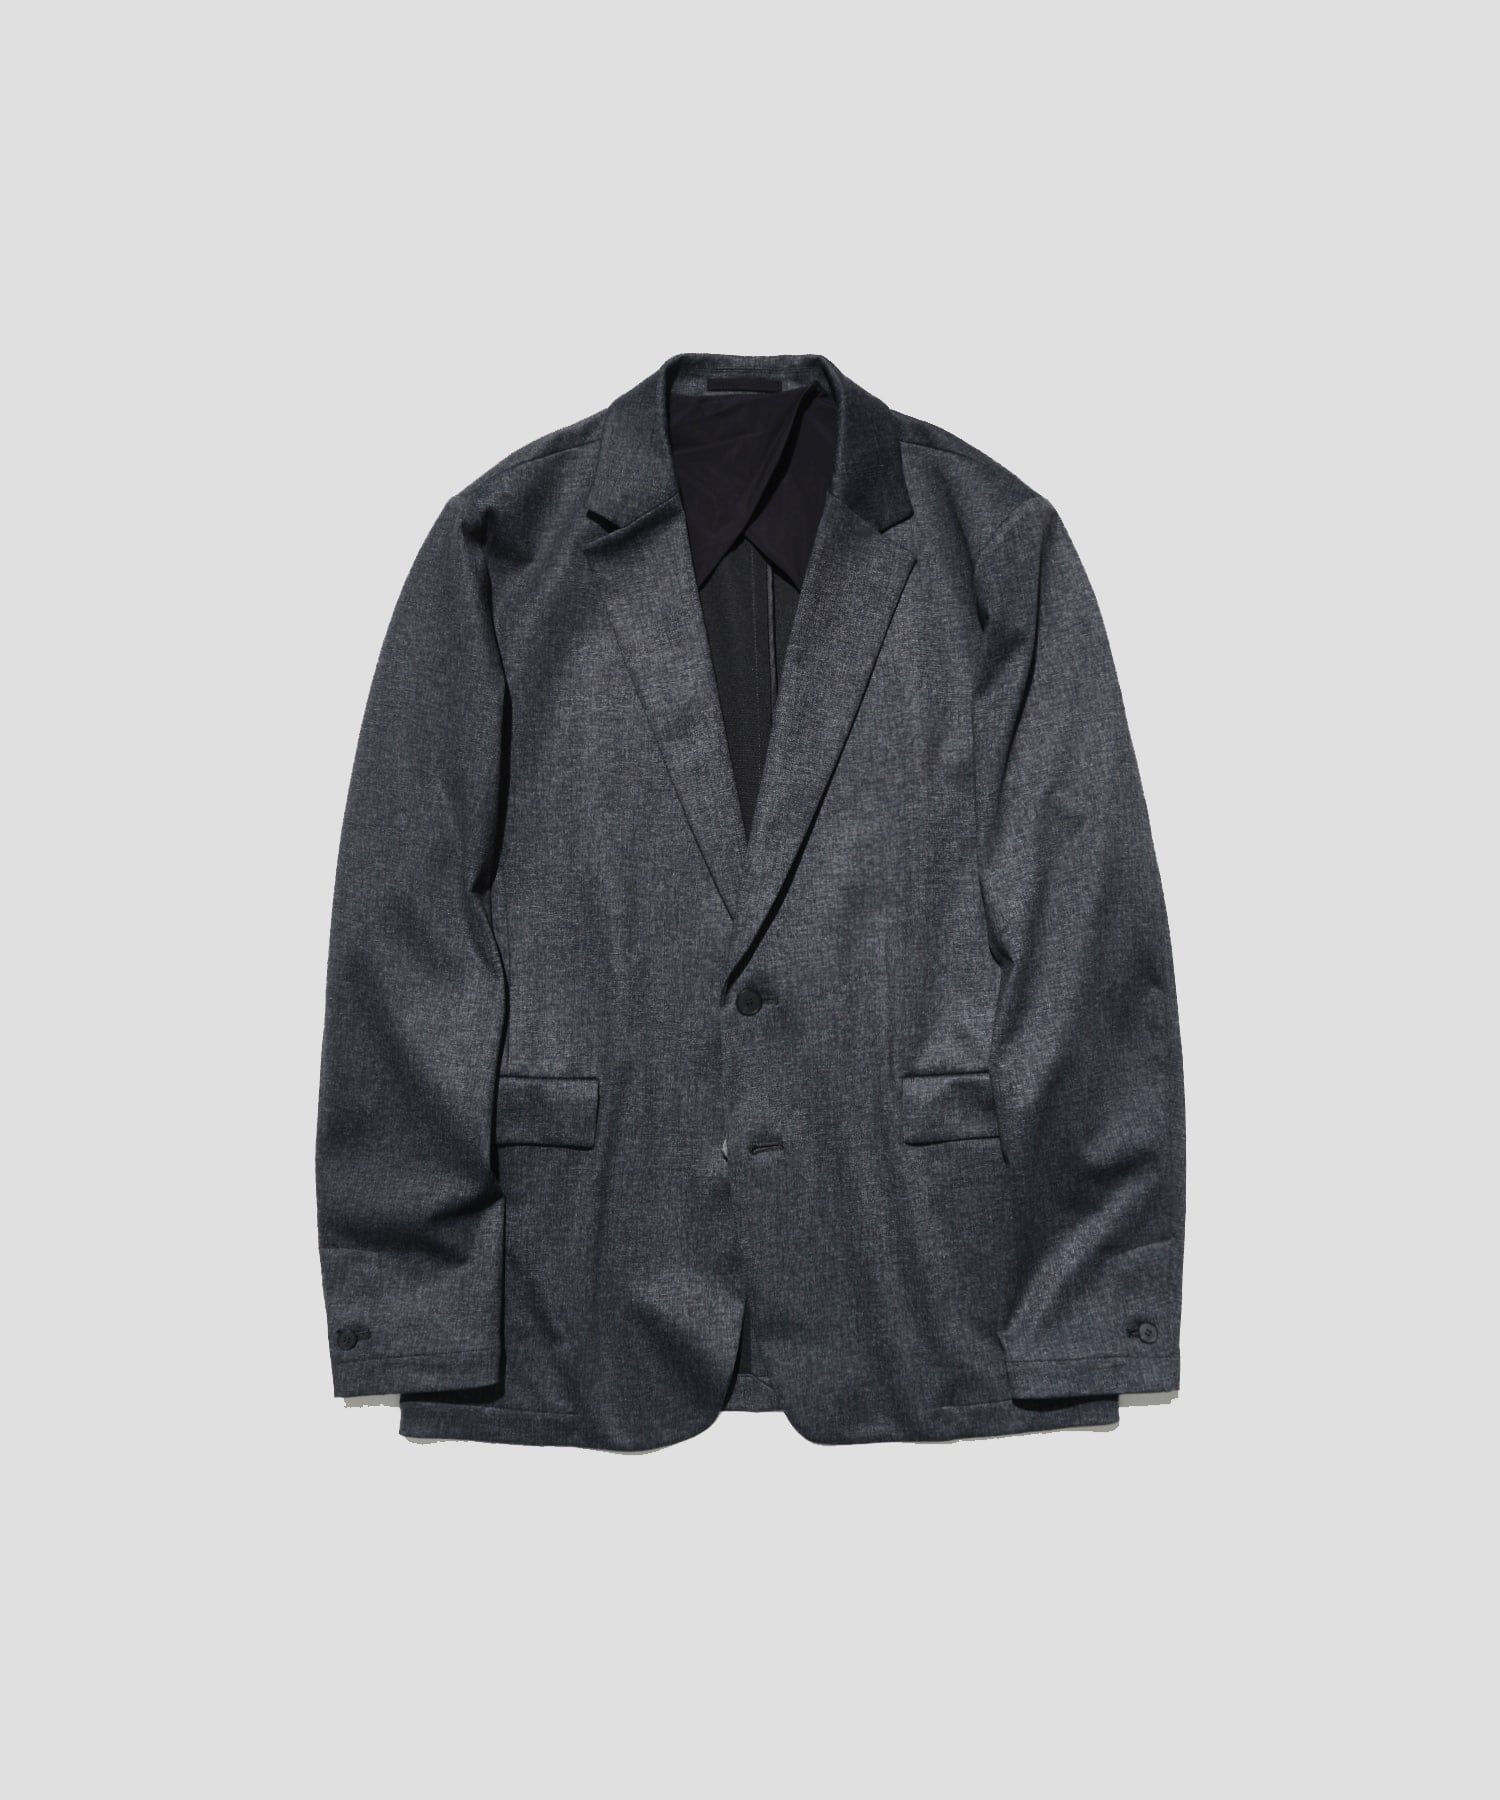 CARREMAN Tweedy Jersey Shape Jacket